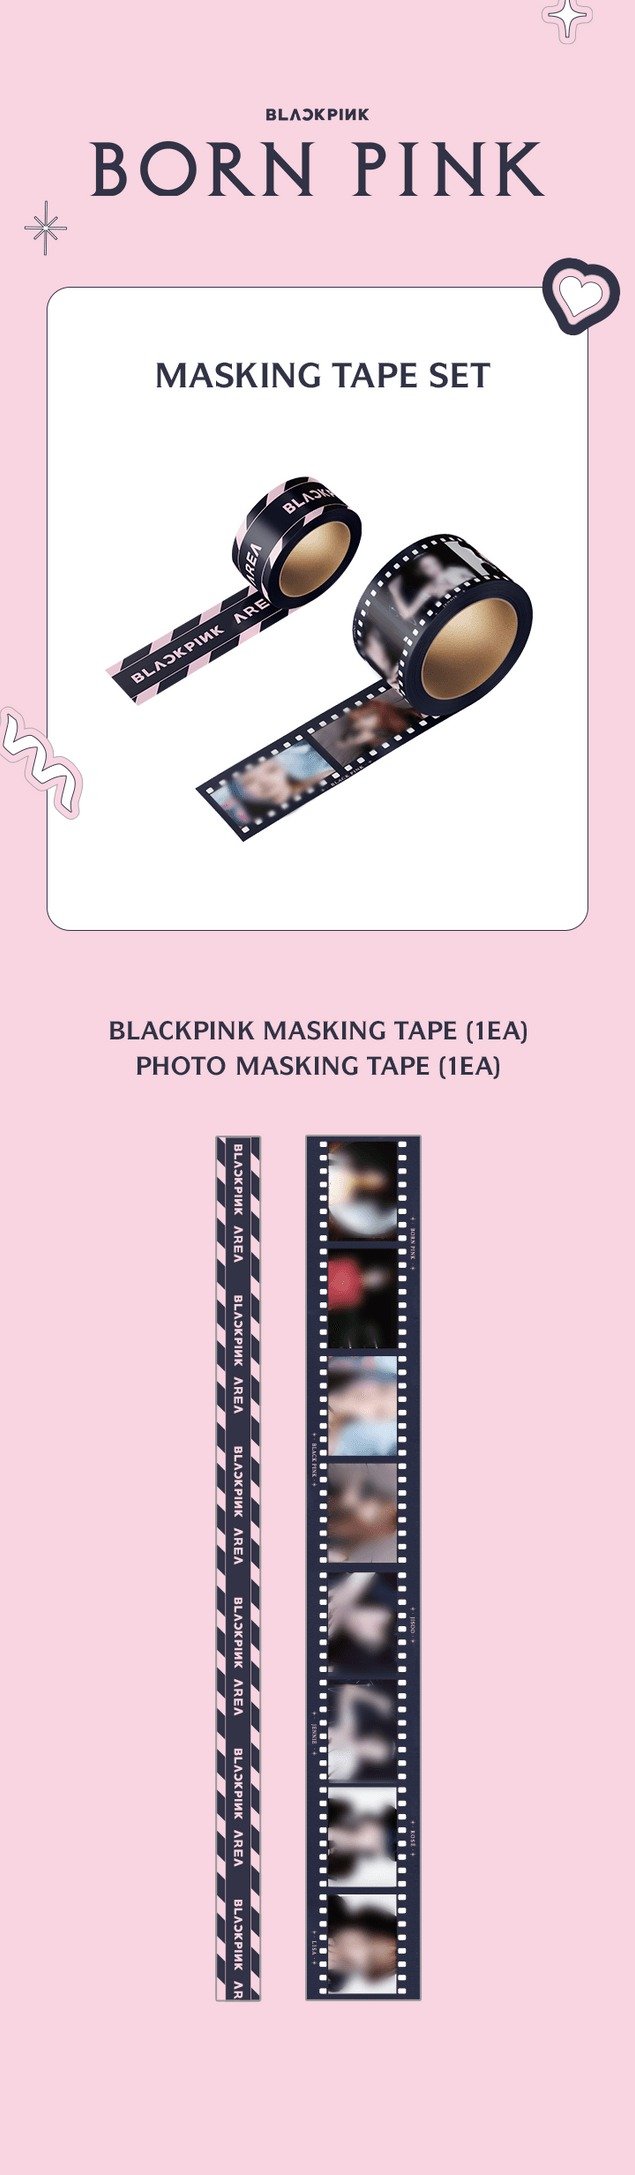 BLACKPINK [ボーンピンク] マスキングテープセット